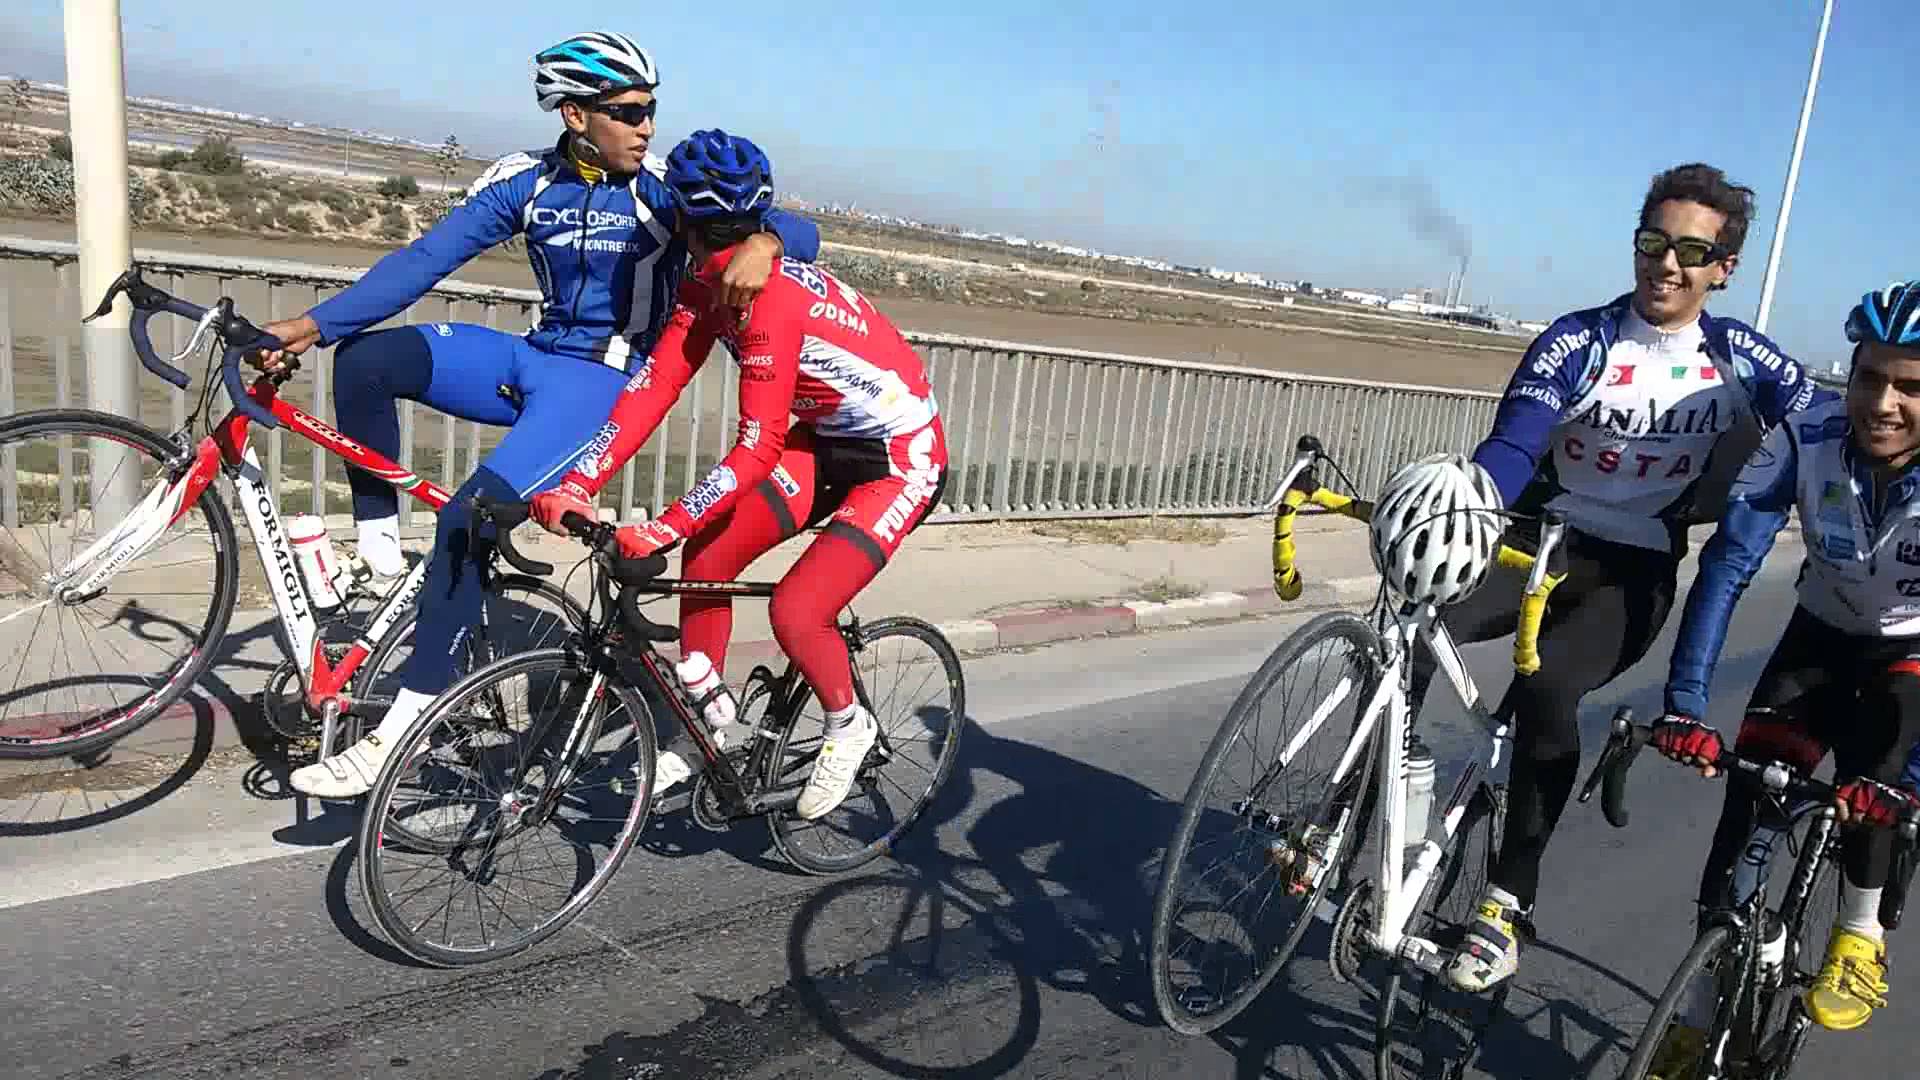 Cyclisme : La Tunisie accueille 3 courses cyclistes continentales